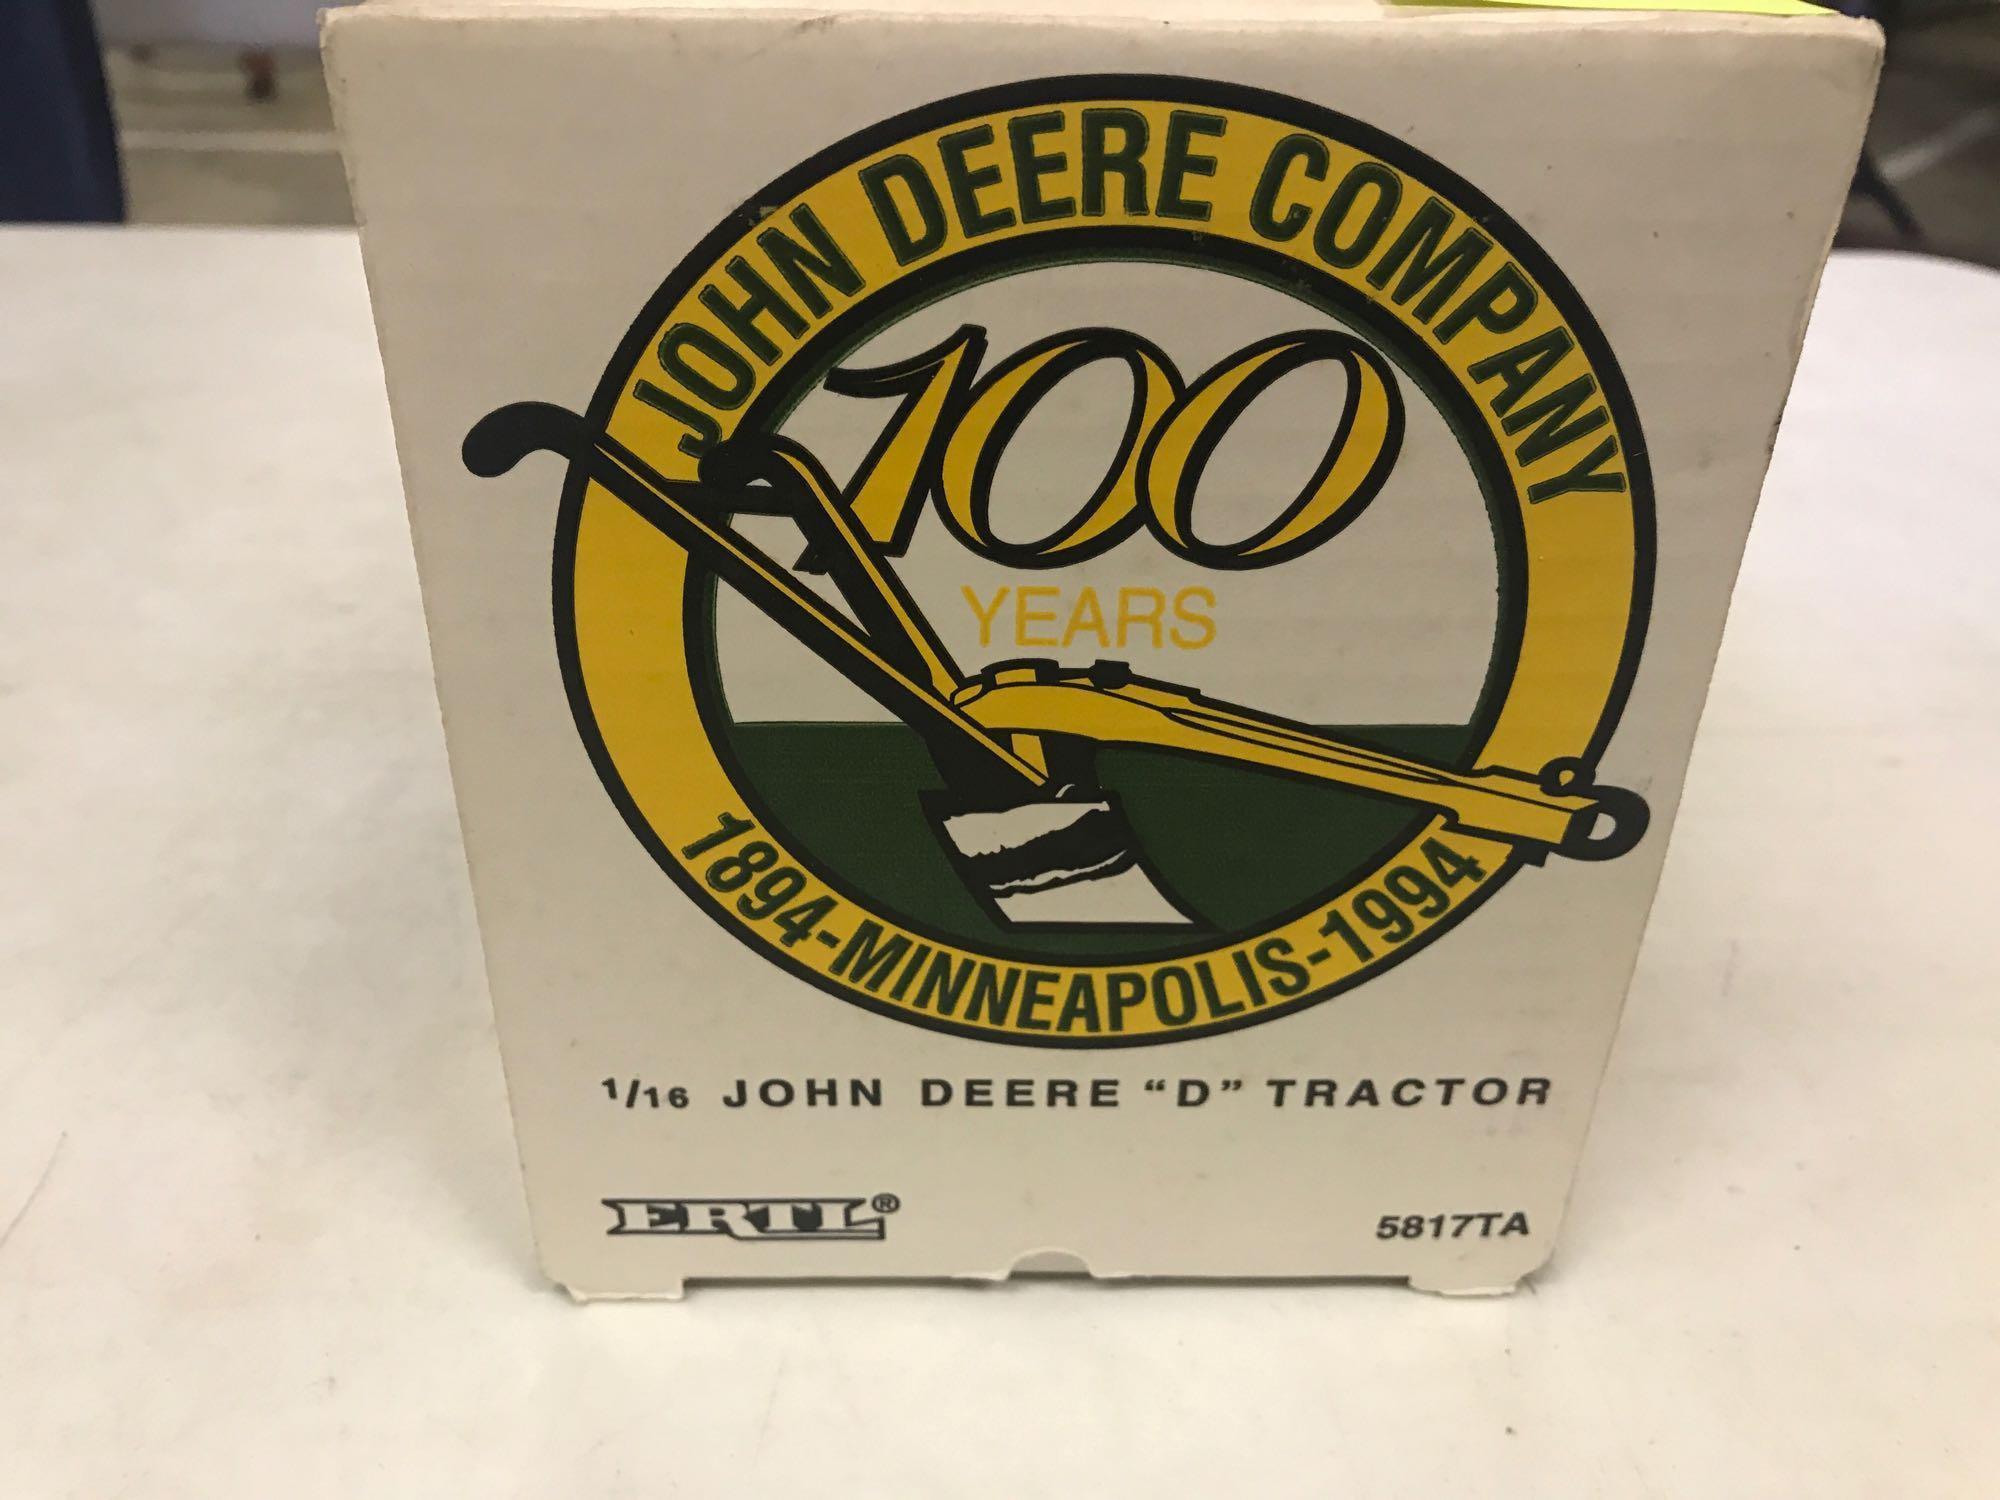 John Deere "D" 100 Years